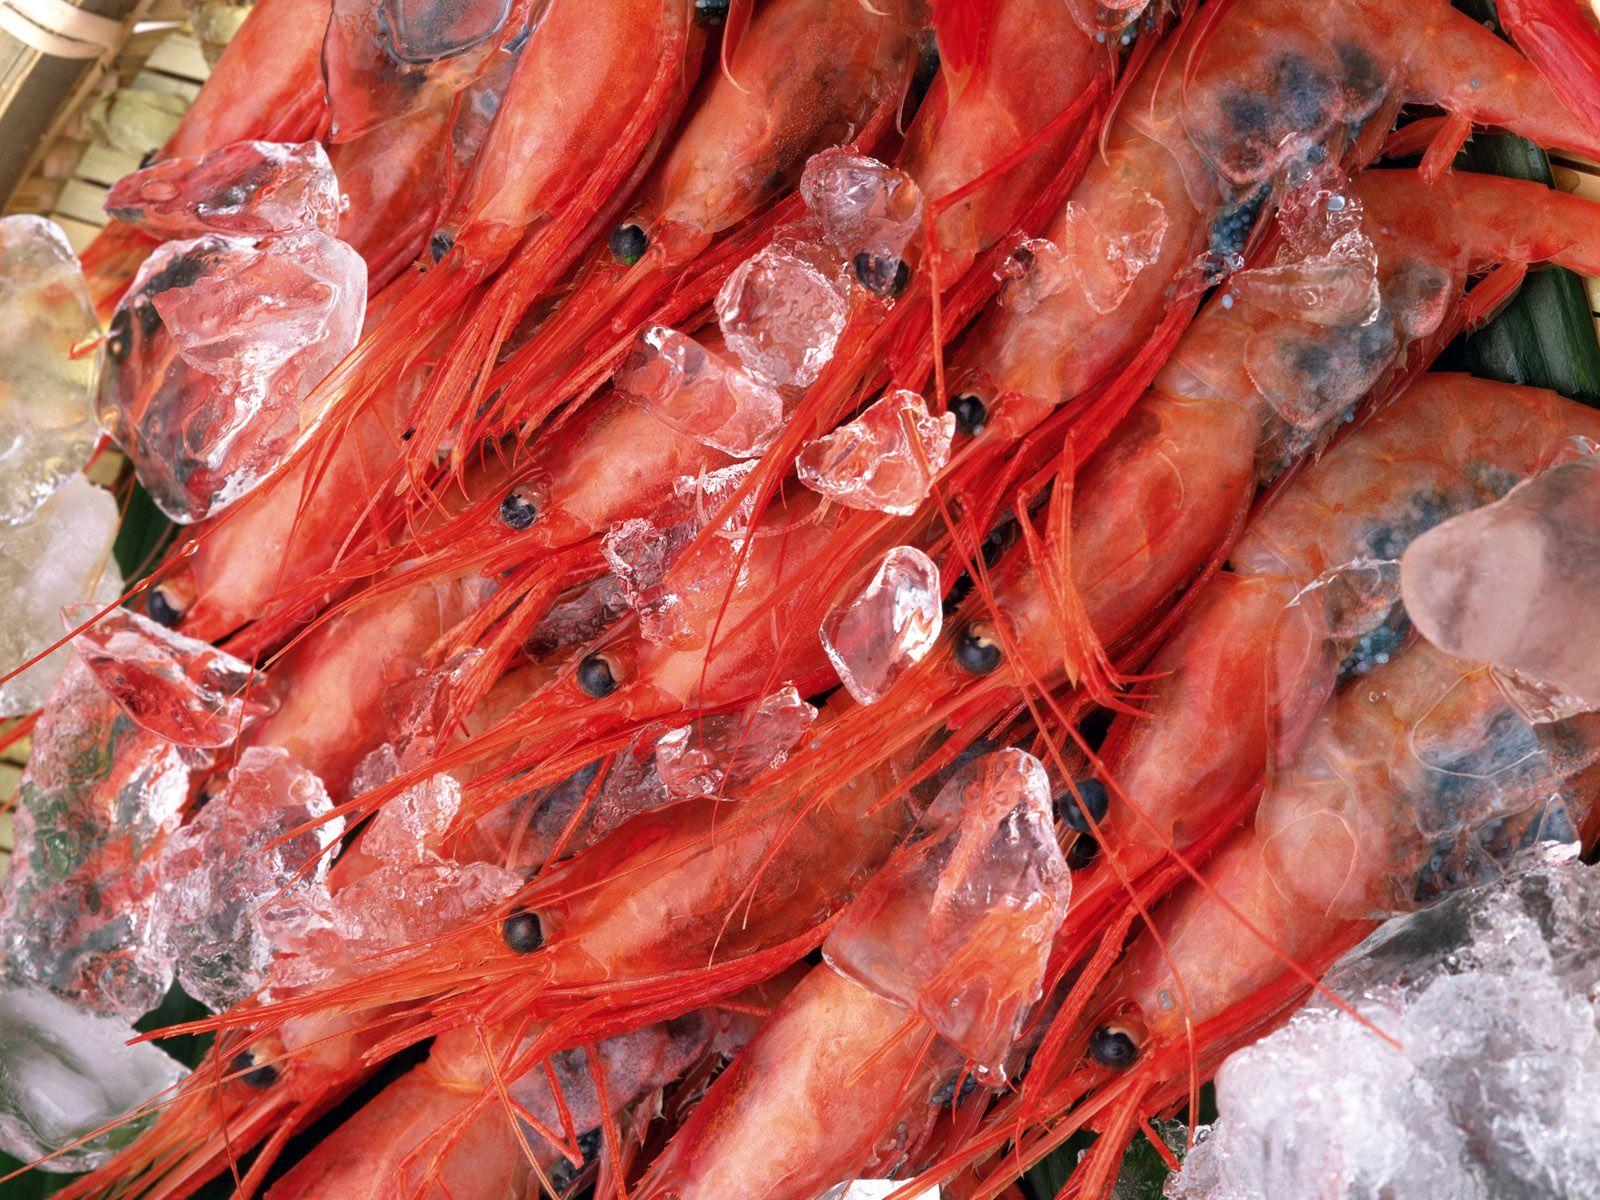 Frozen shrimp wallpaper and image, picture, photo